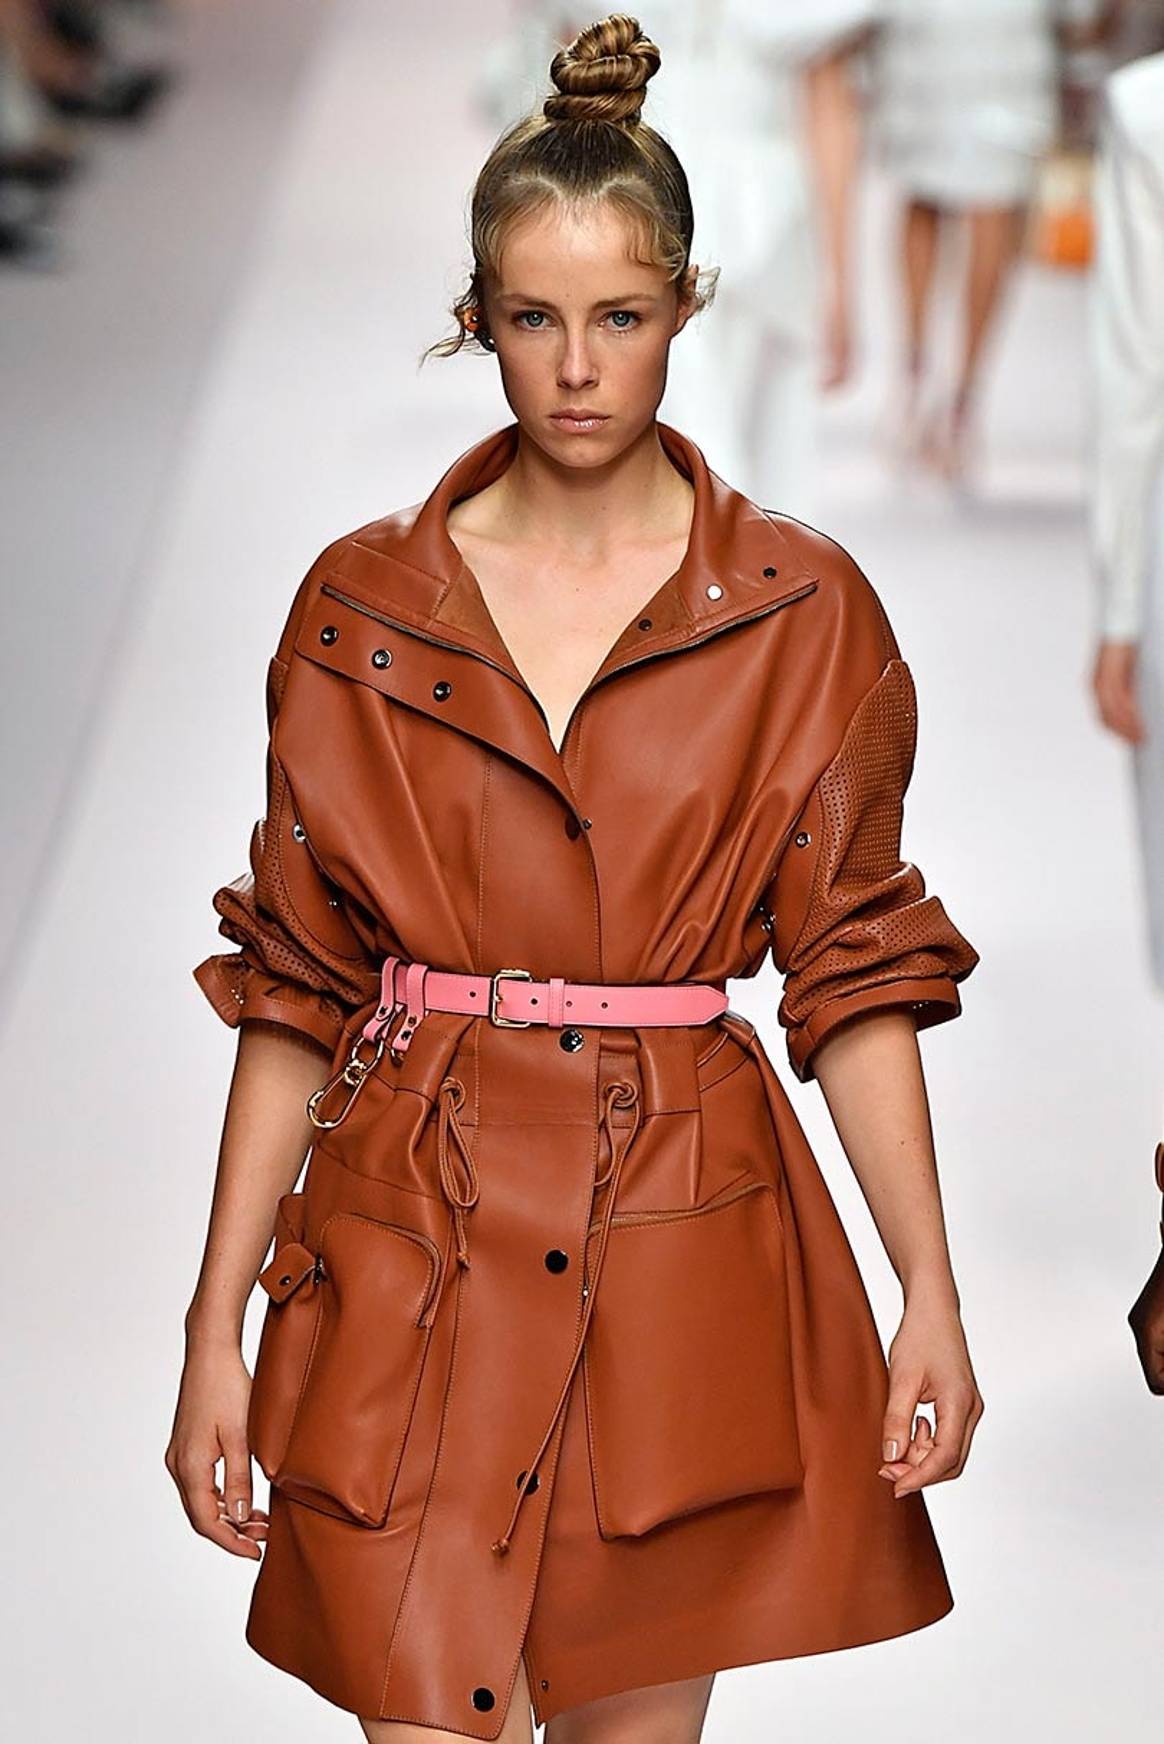 Main trends seen on Milan Fashion Week runways